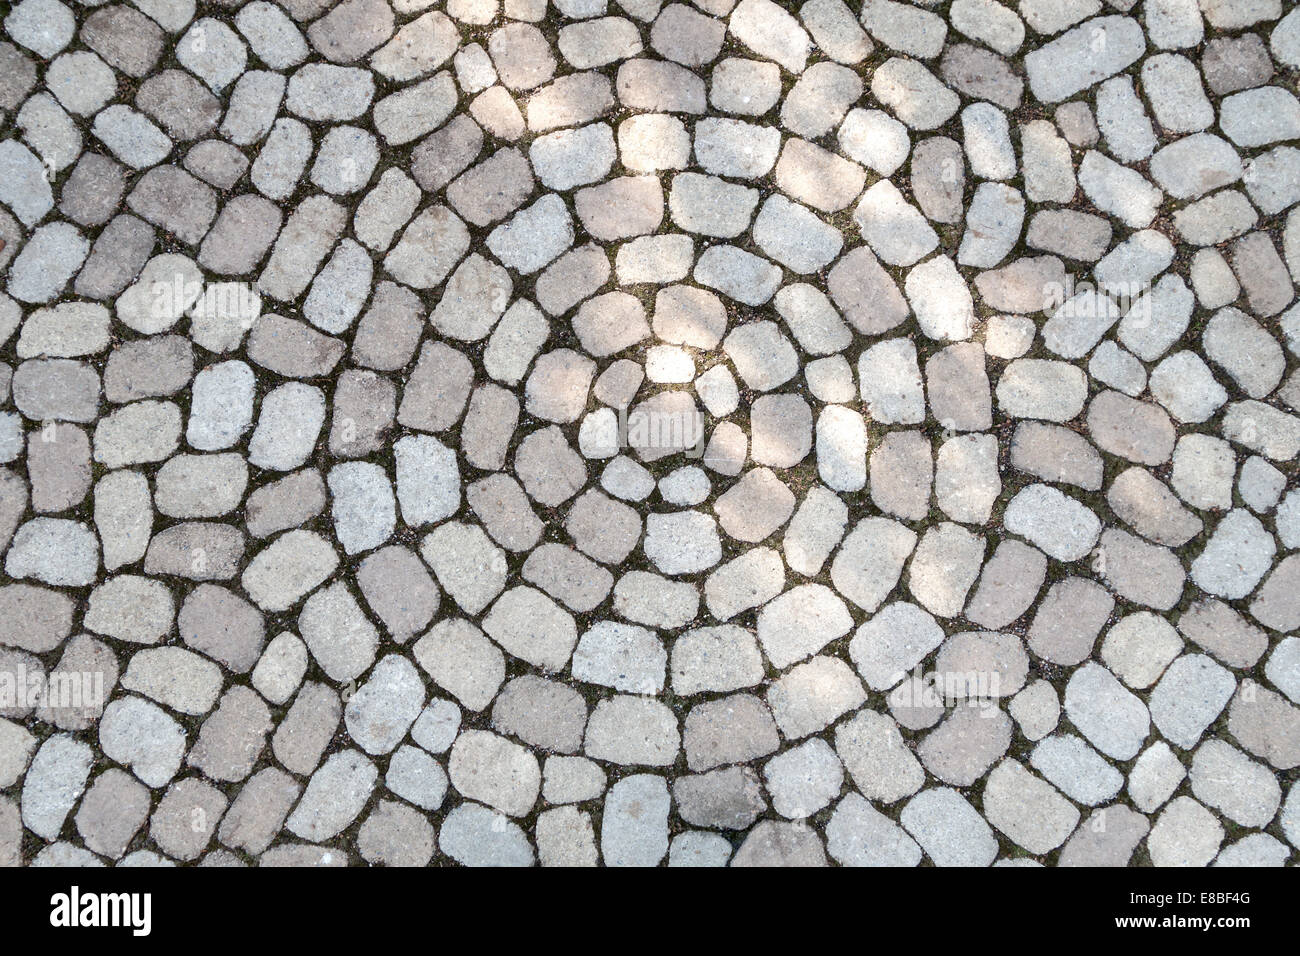 Mosaic of oval cobblestones Stock Photo